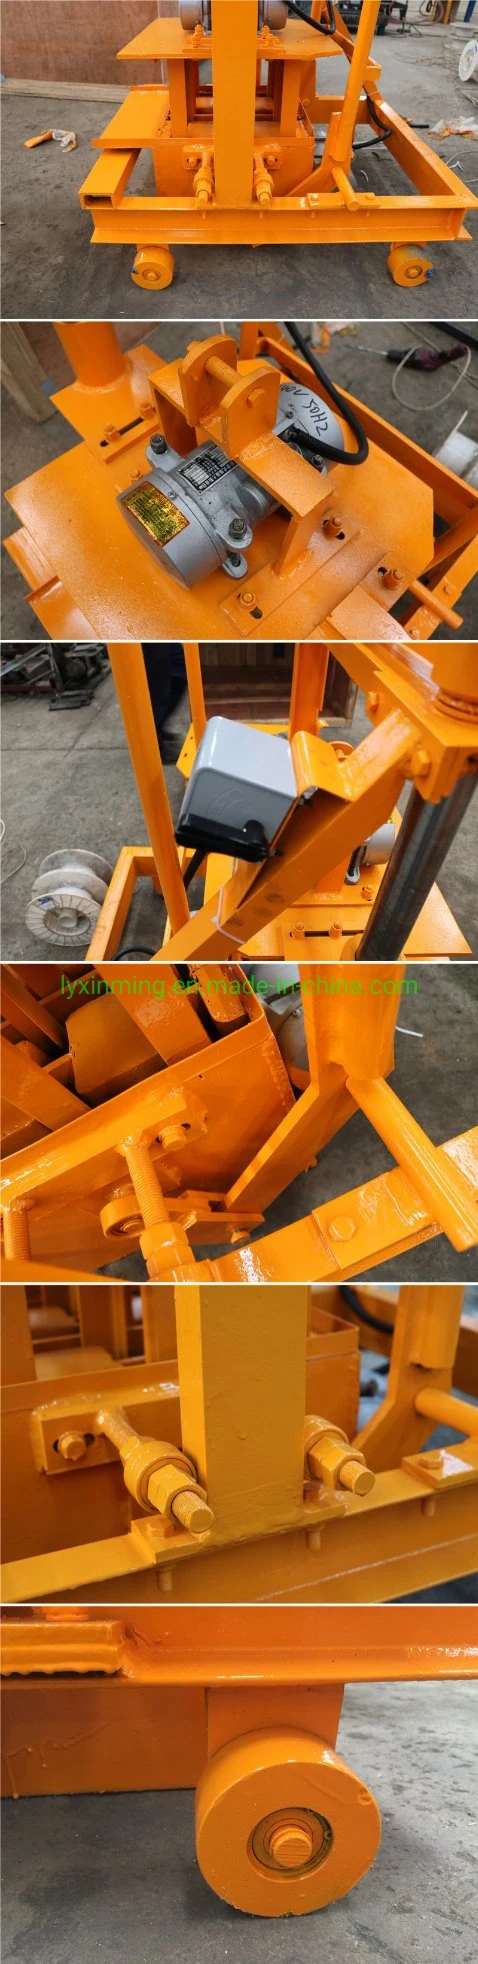 Muitipurpose Qmr2-45 Egg Laying Block Machine Small Scale Brick Industries Machine for Agents